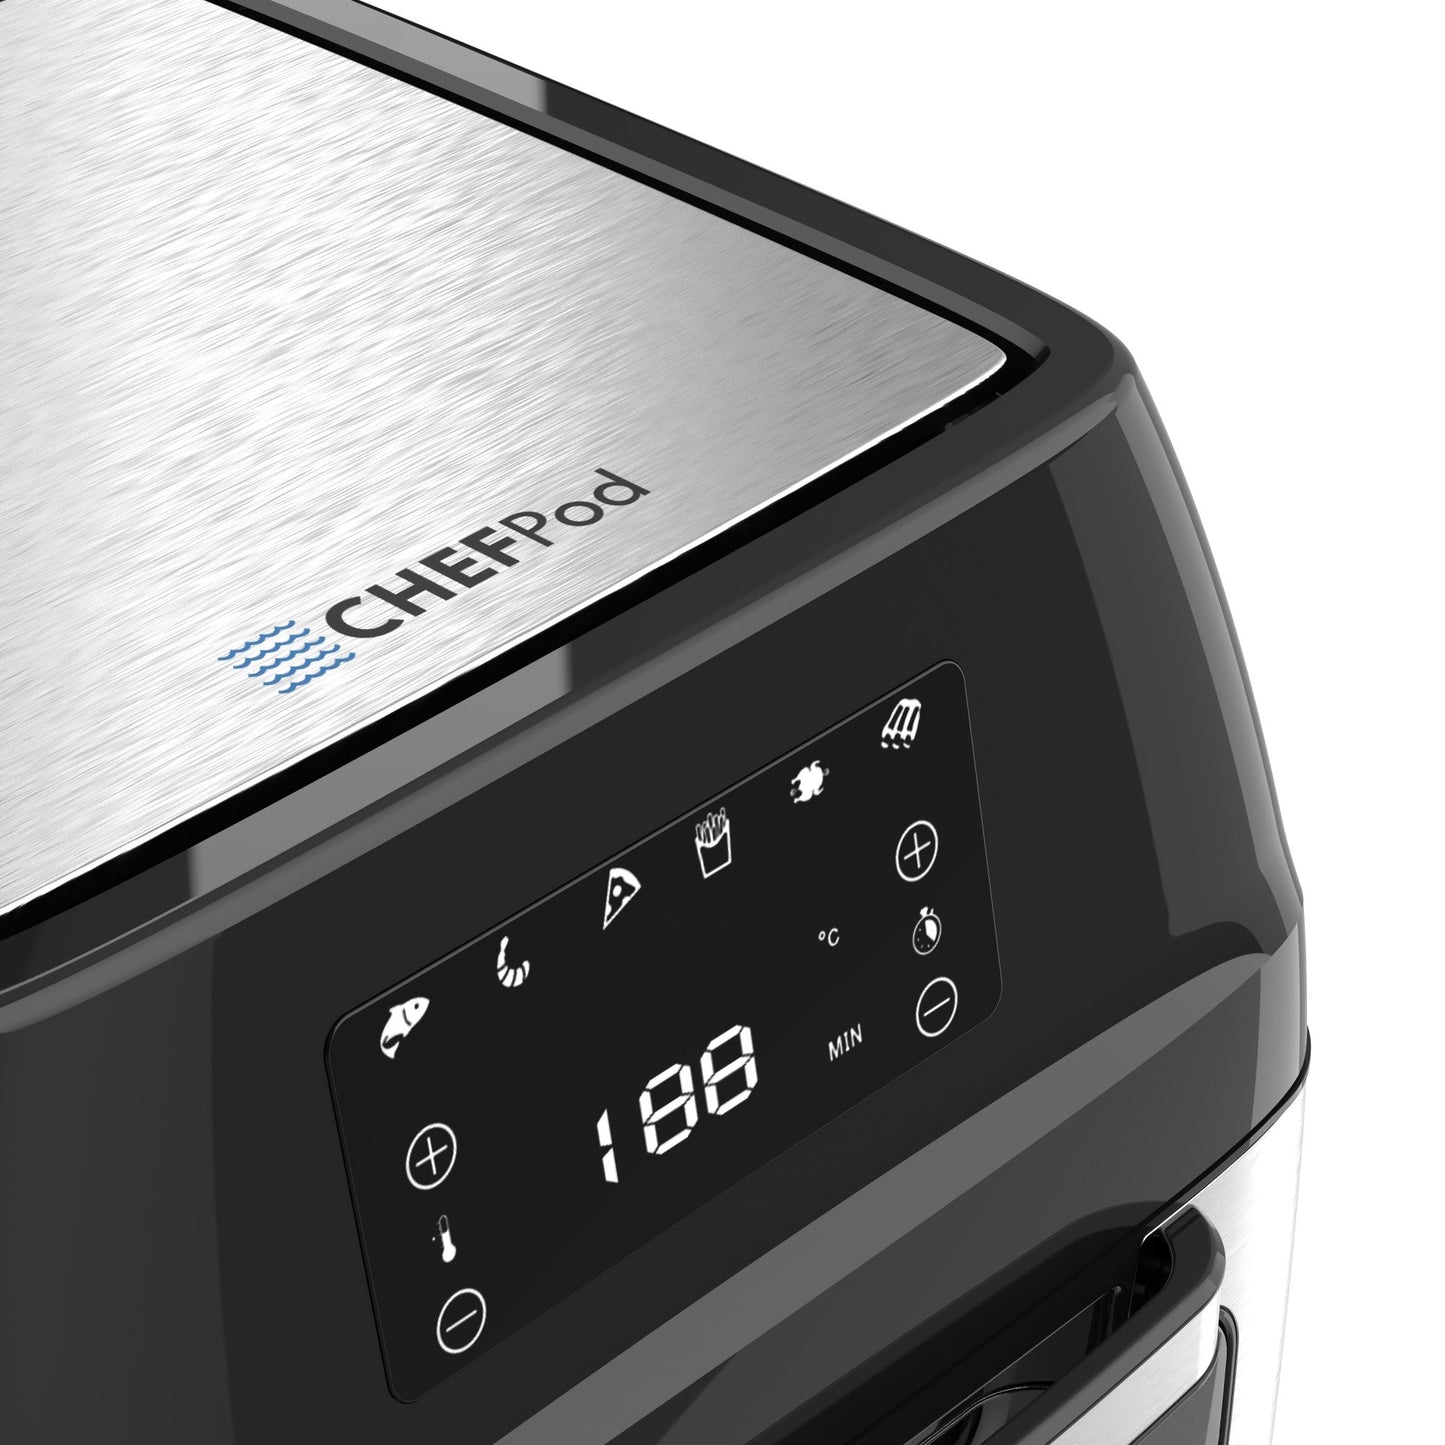 CHEFPod Pro - Air Fryer Oven Digital Touchscreen 13 QT Family